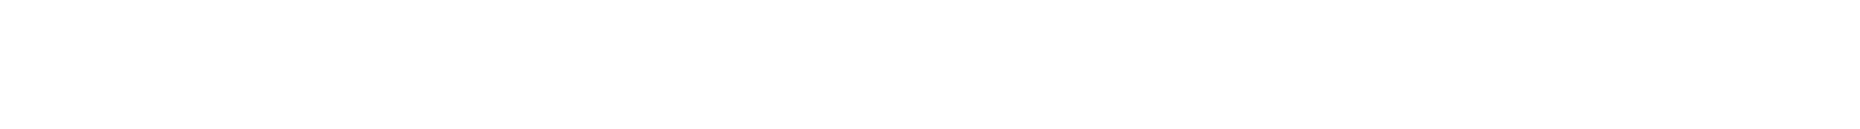 Oracle NetSuite - Logo 2021 White